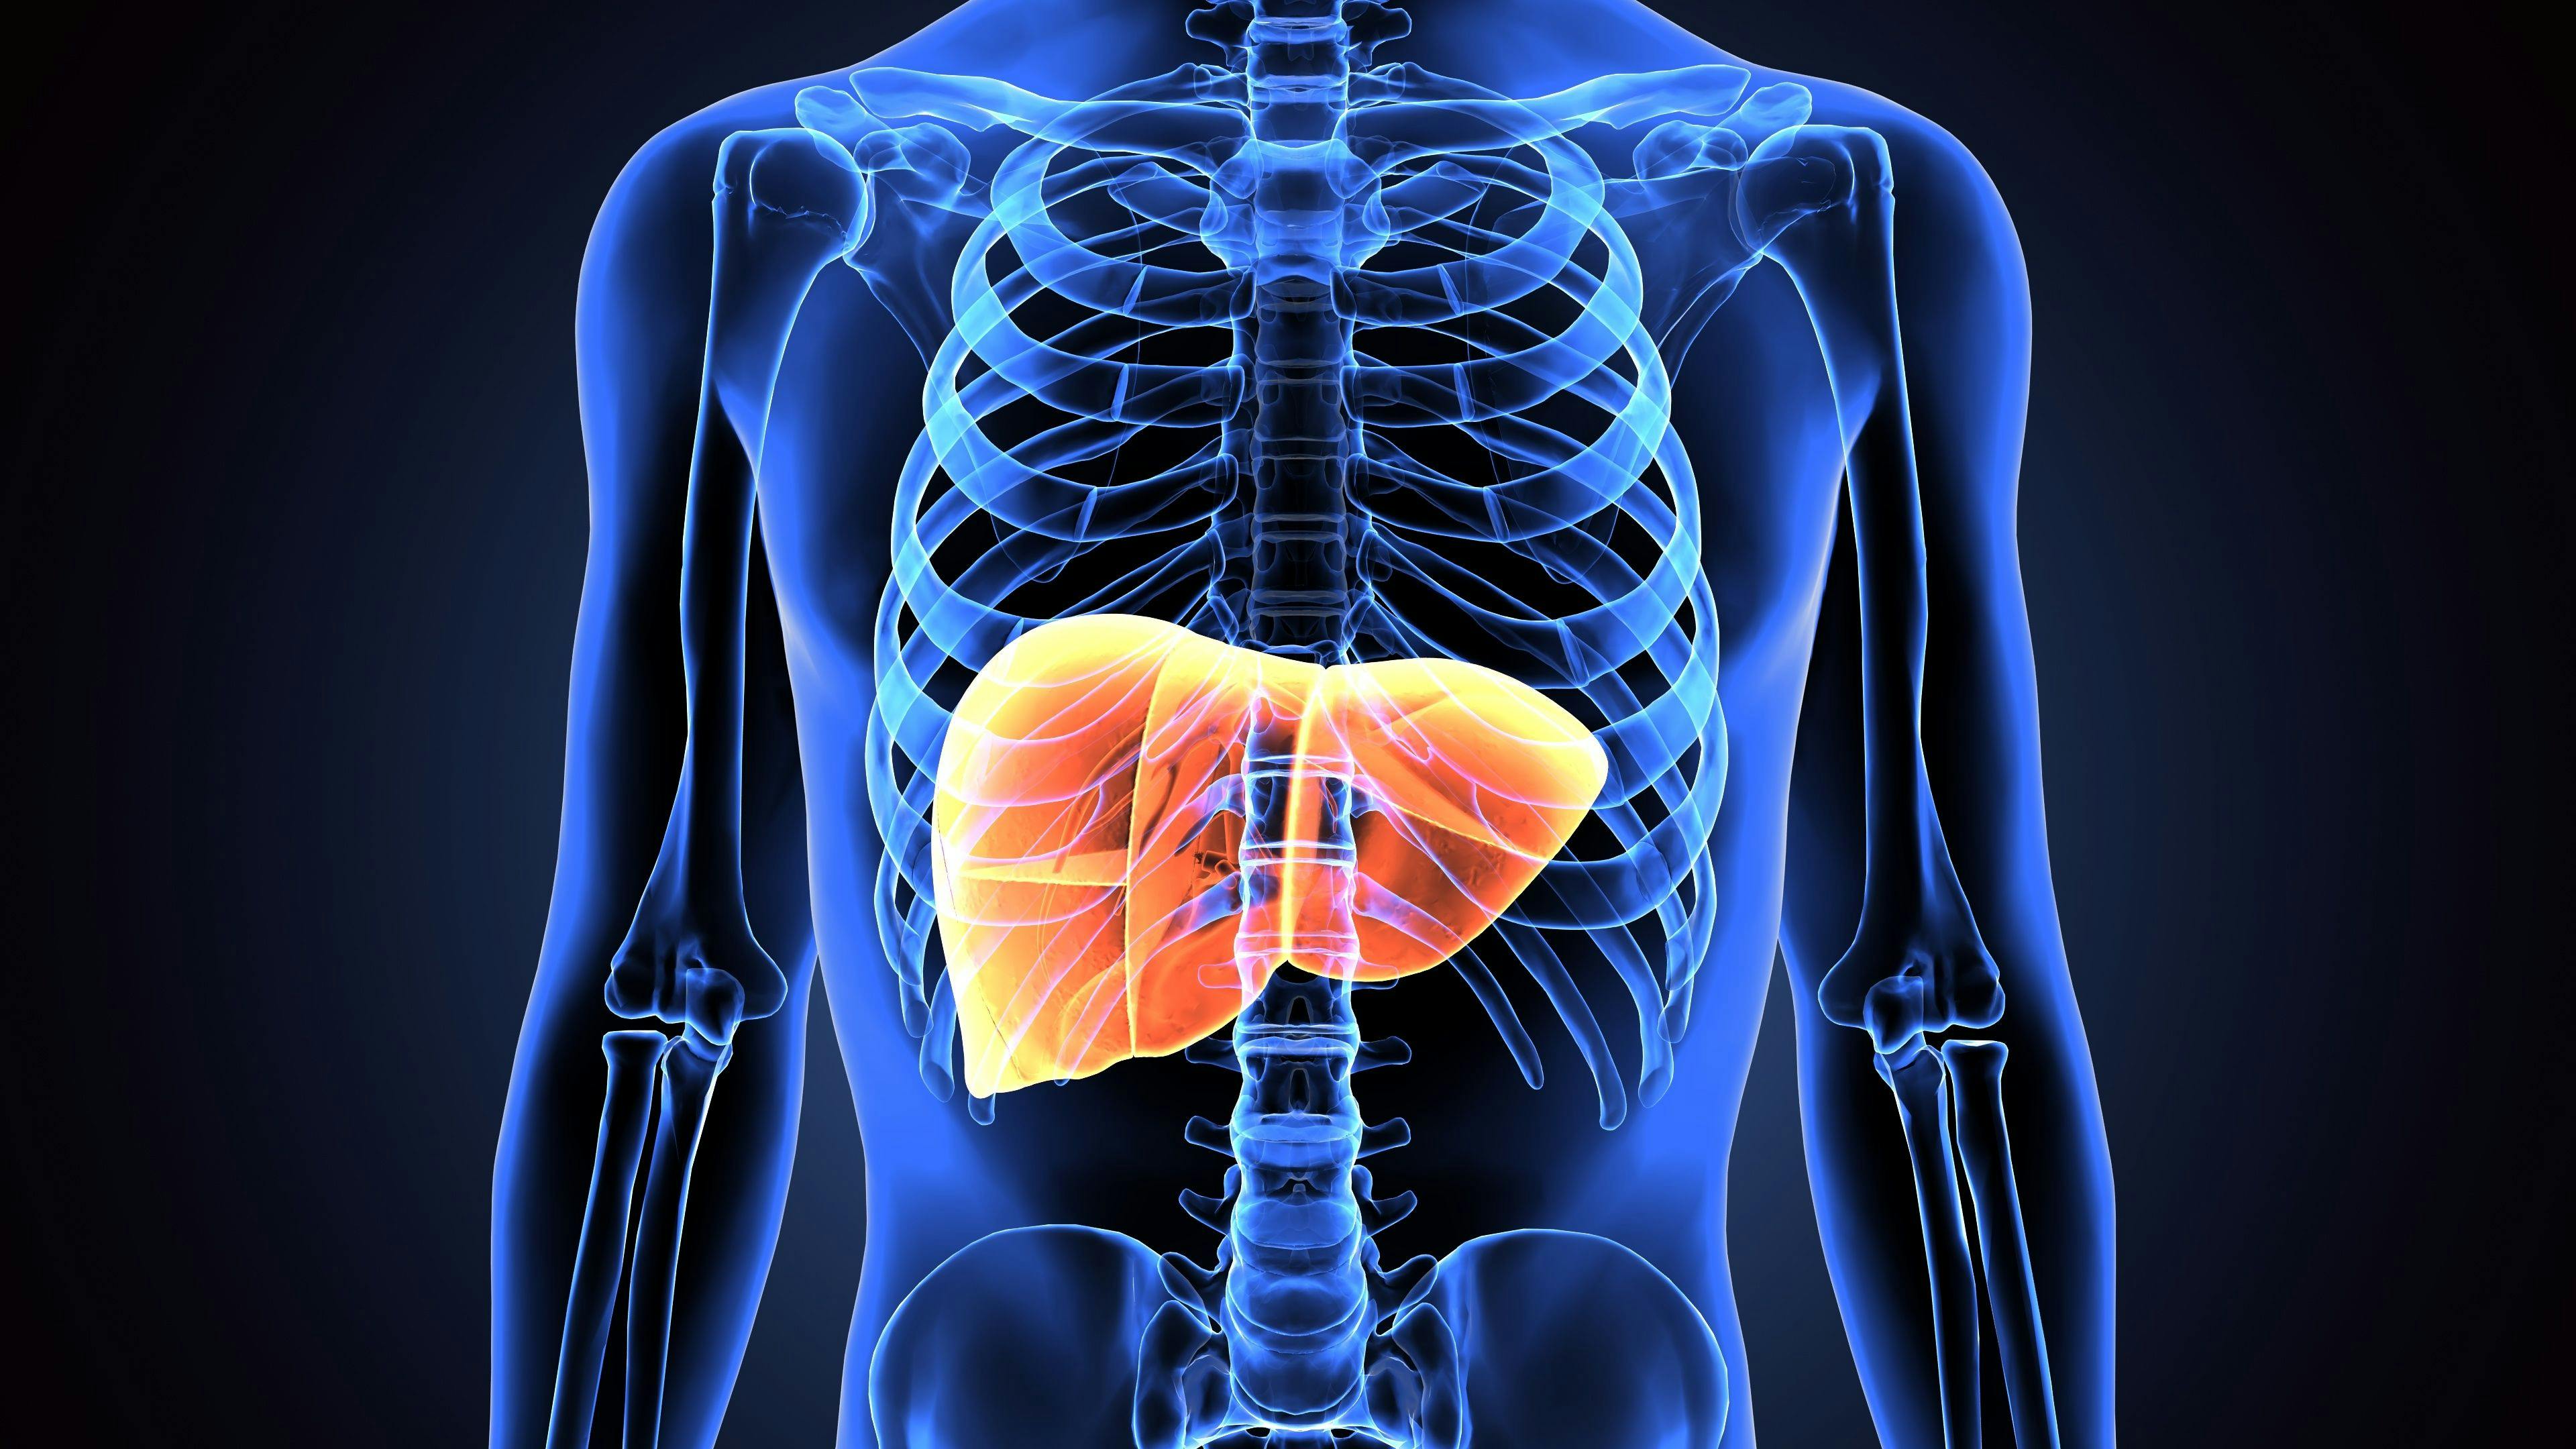 3d illustration of human body liver | Image Credit: © PIC4U - stock.adobe.com